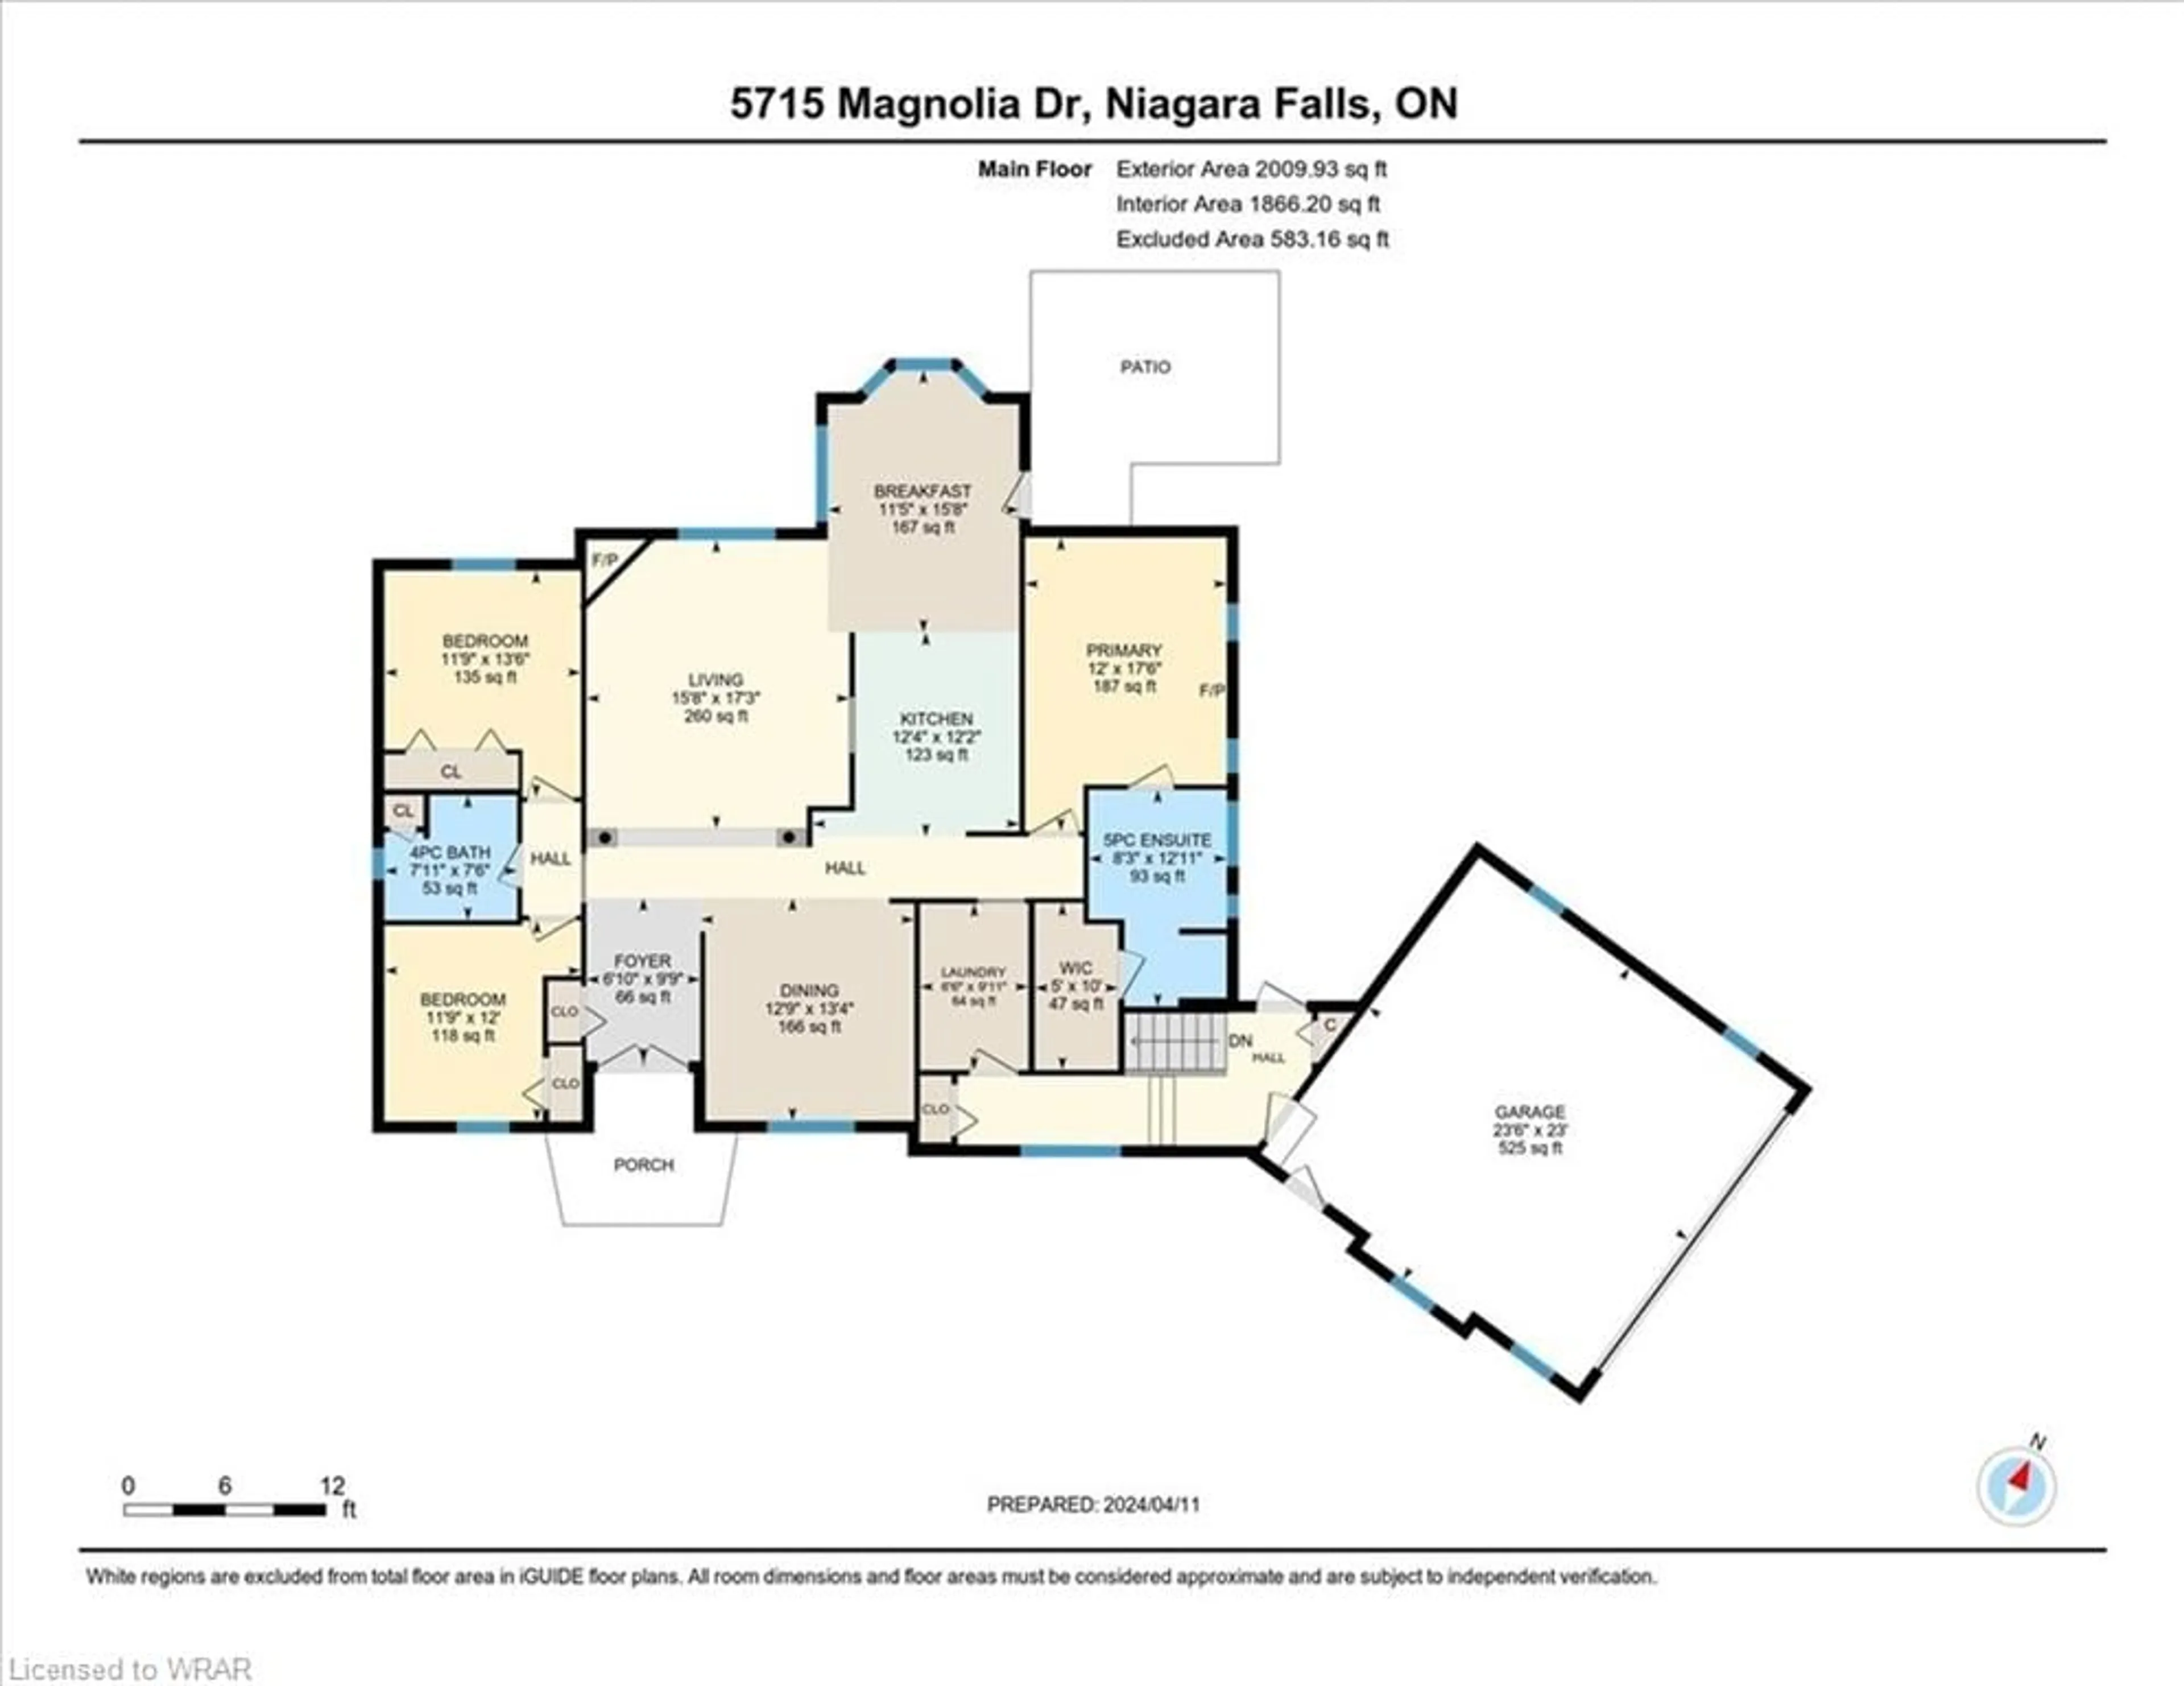 Floor plan for 5715 Magnolia Dr, Niagara Falls Ontario L2H 3J3